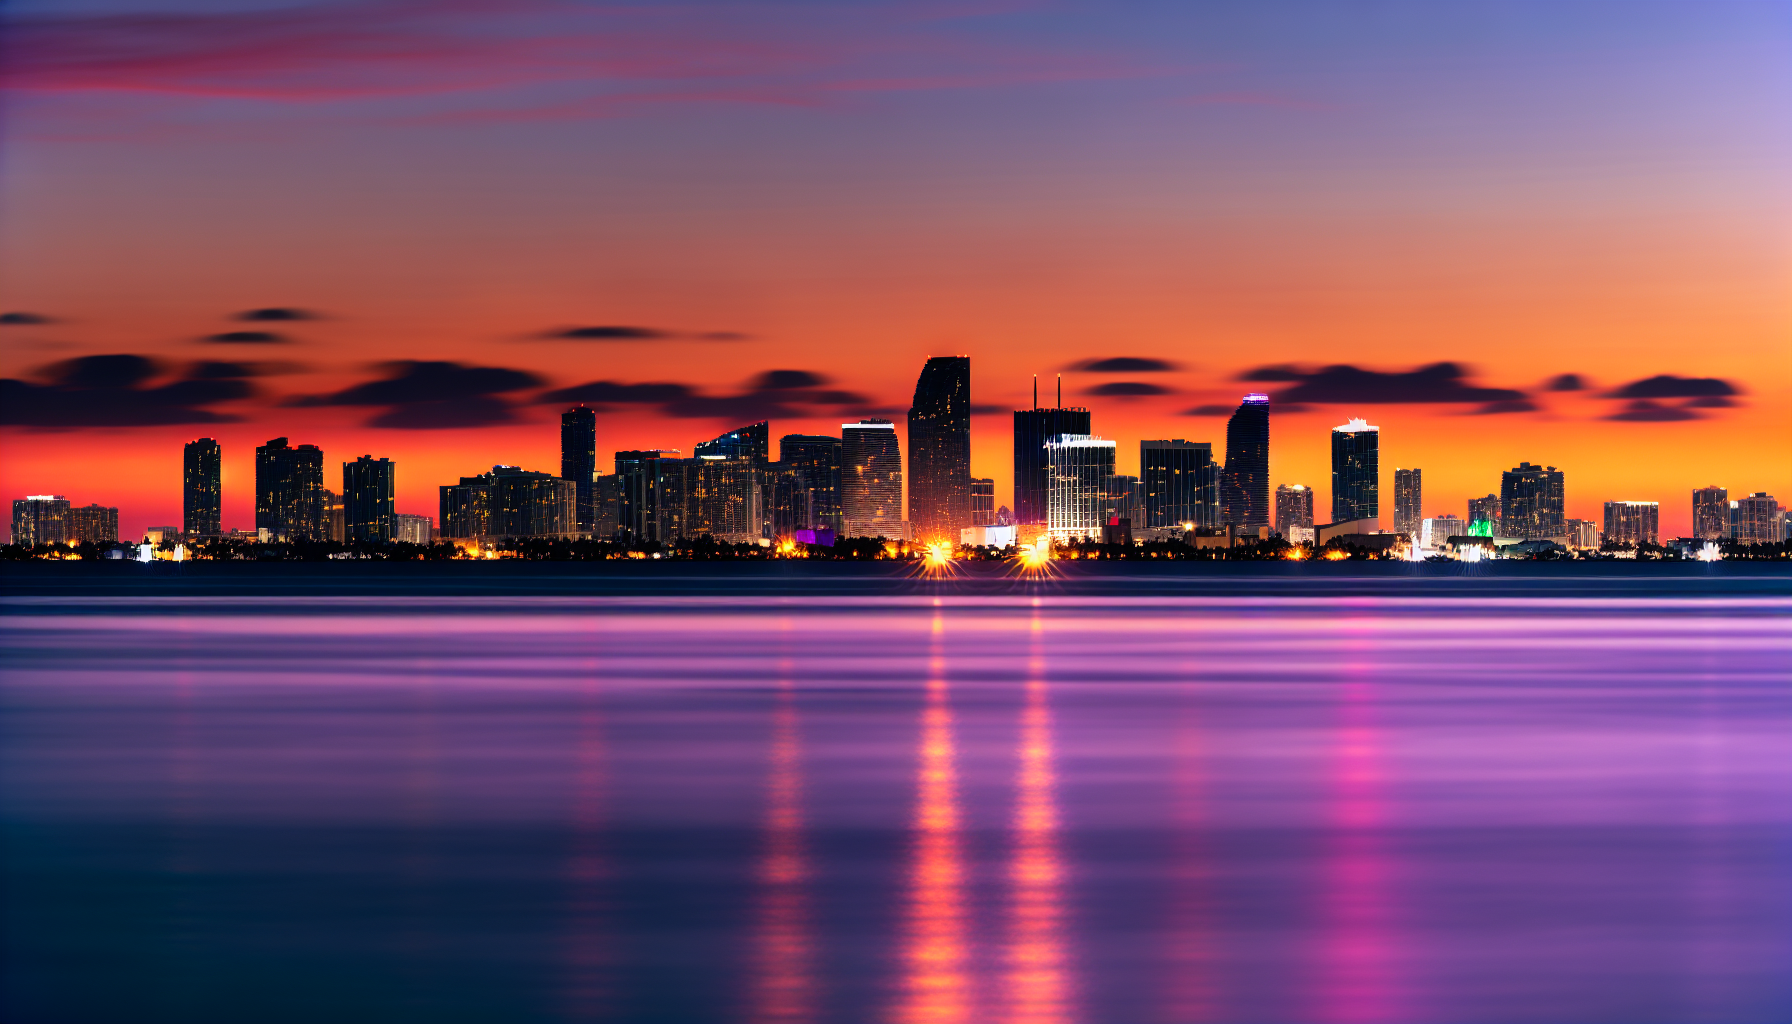 Miami during Sunset!